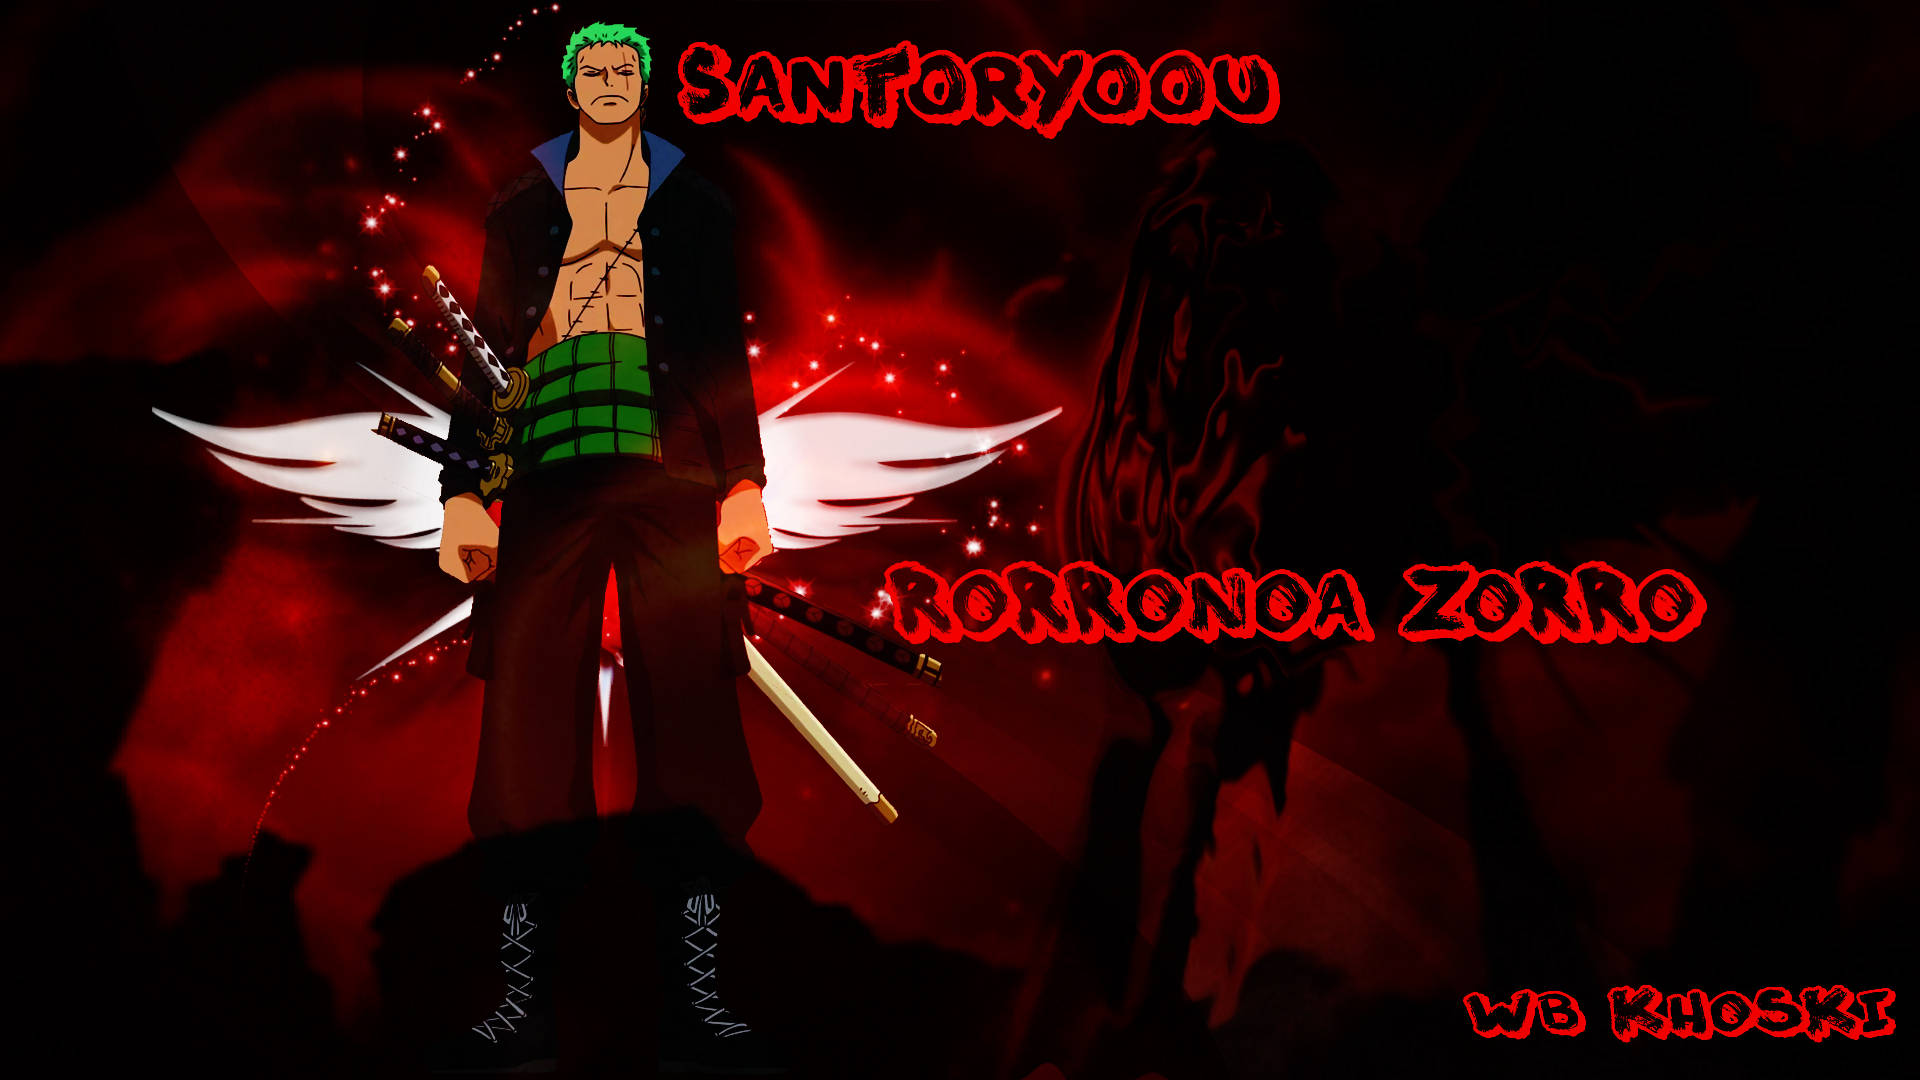 Roronoa Zoro - The Unstoppable Swordsman Wallpaper